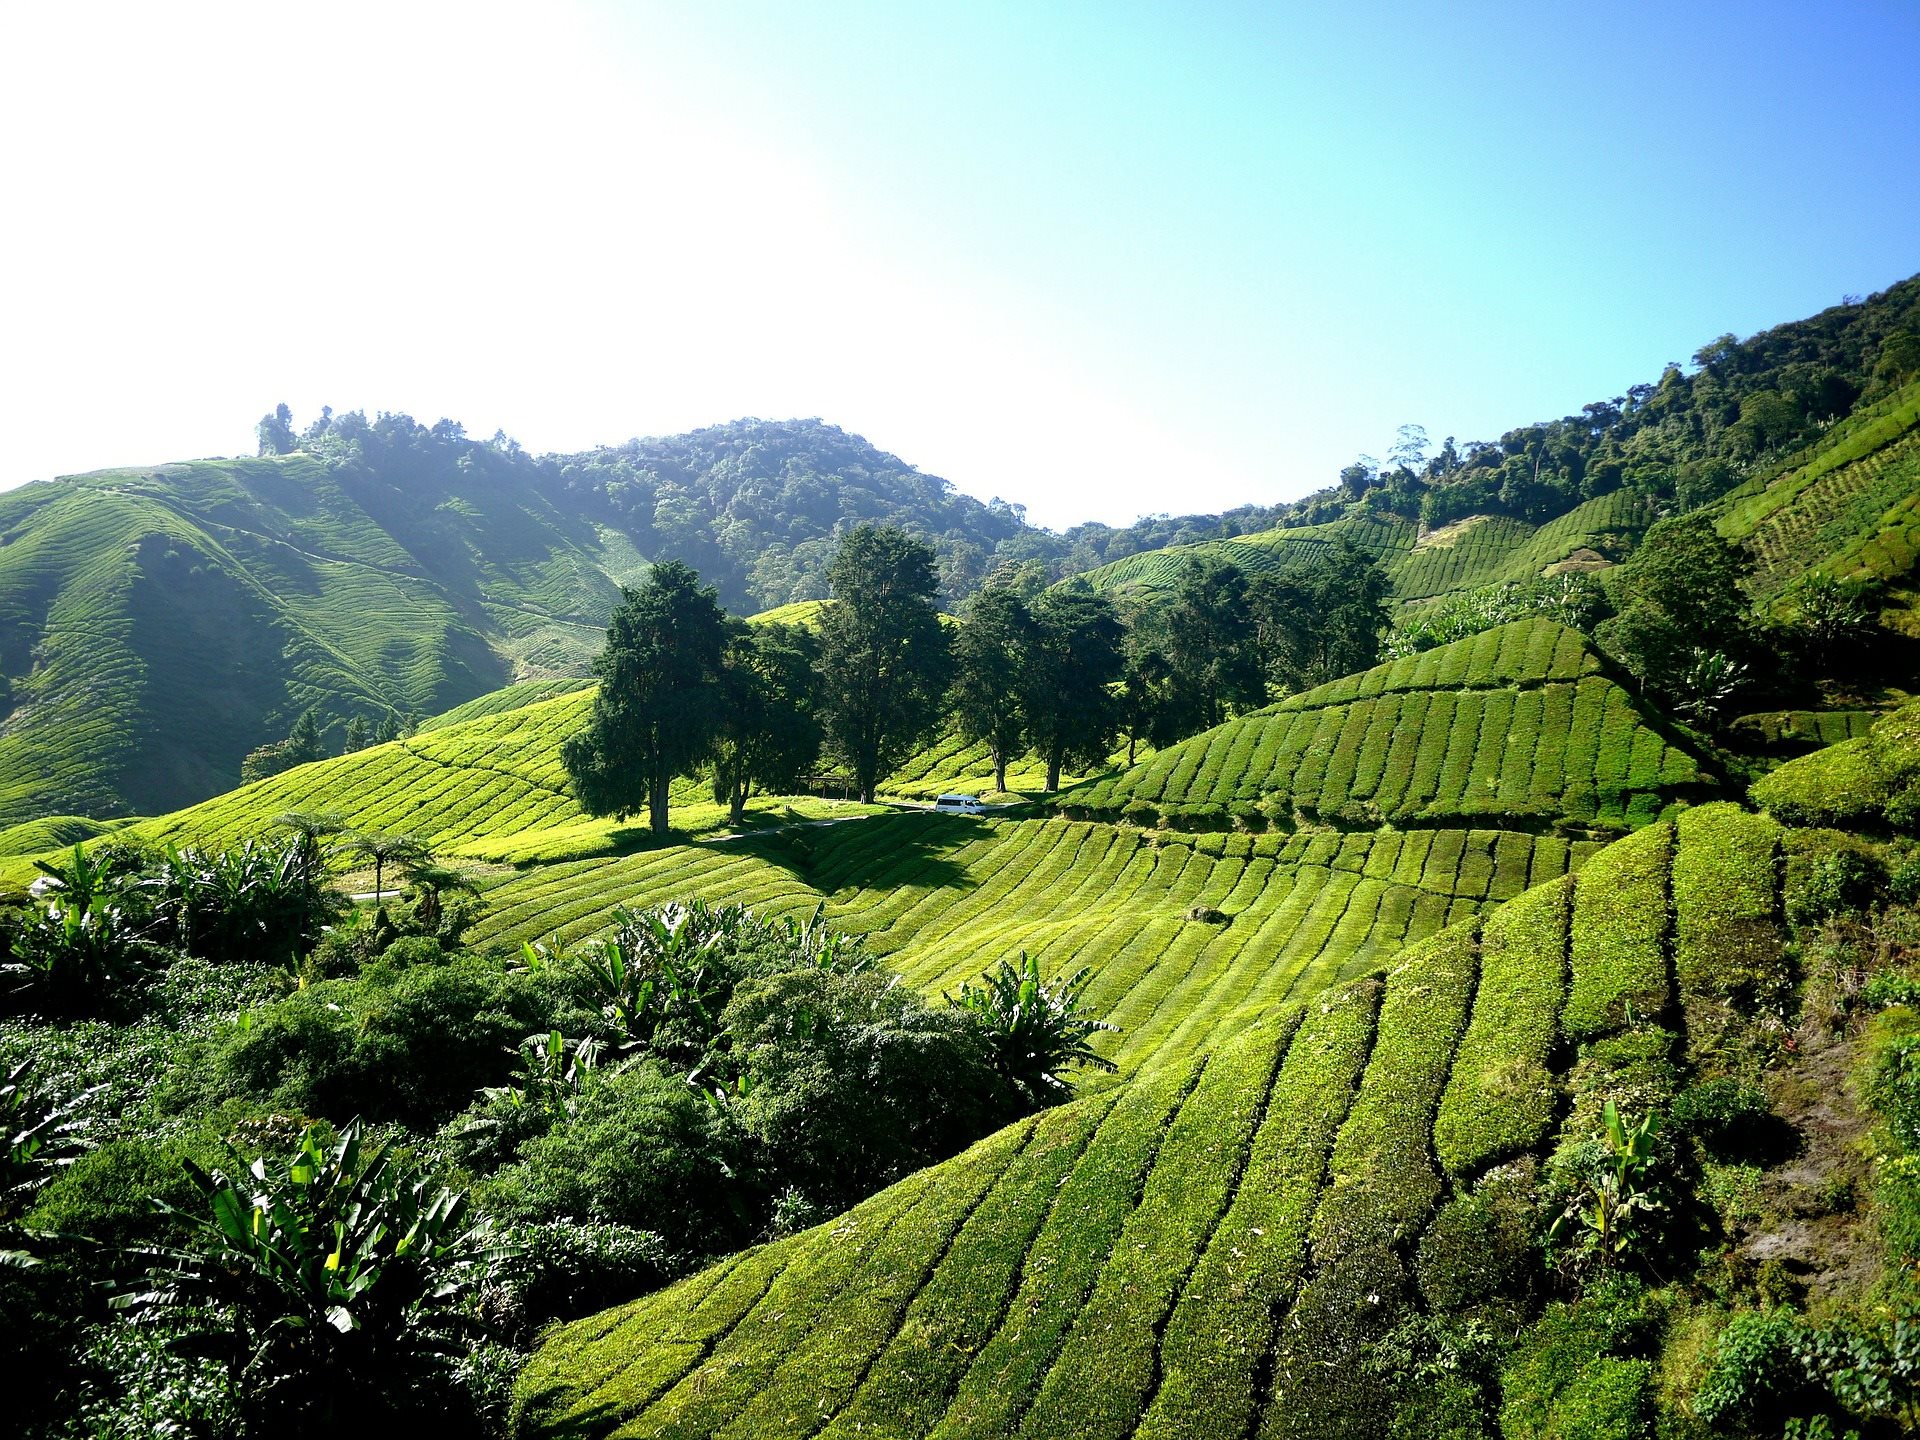 Cameron Highlands tea-plantation